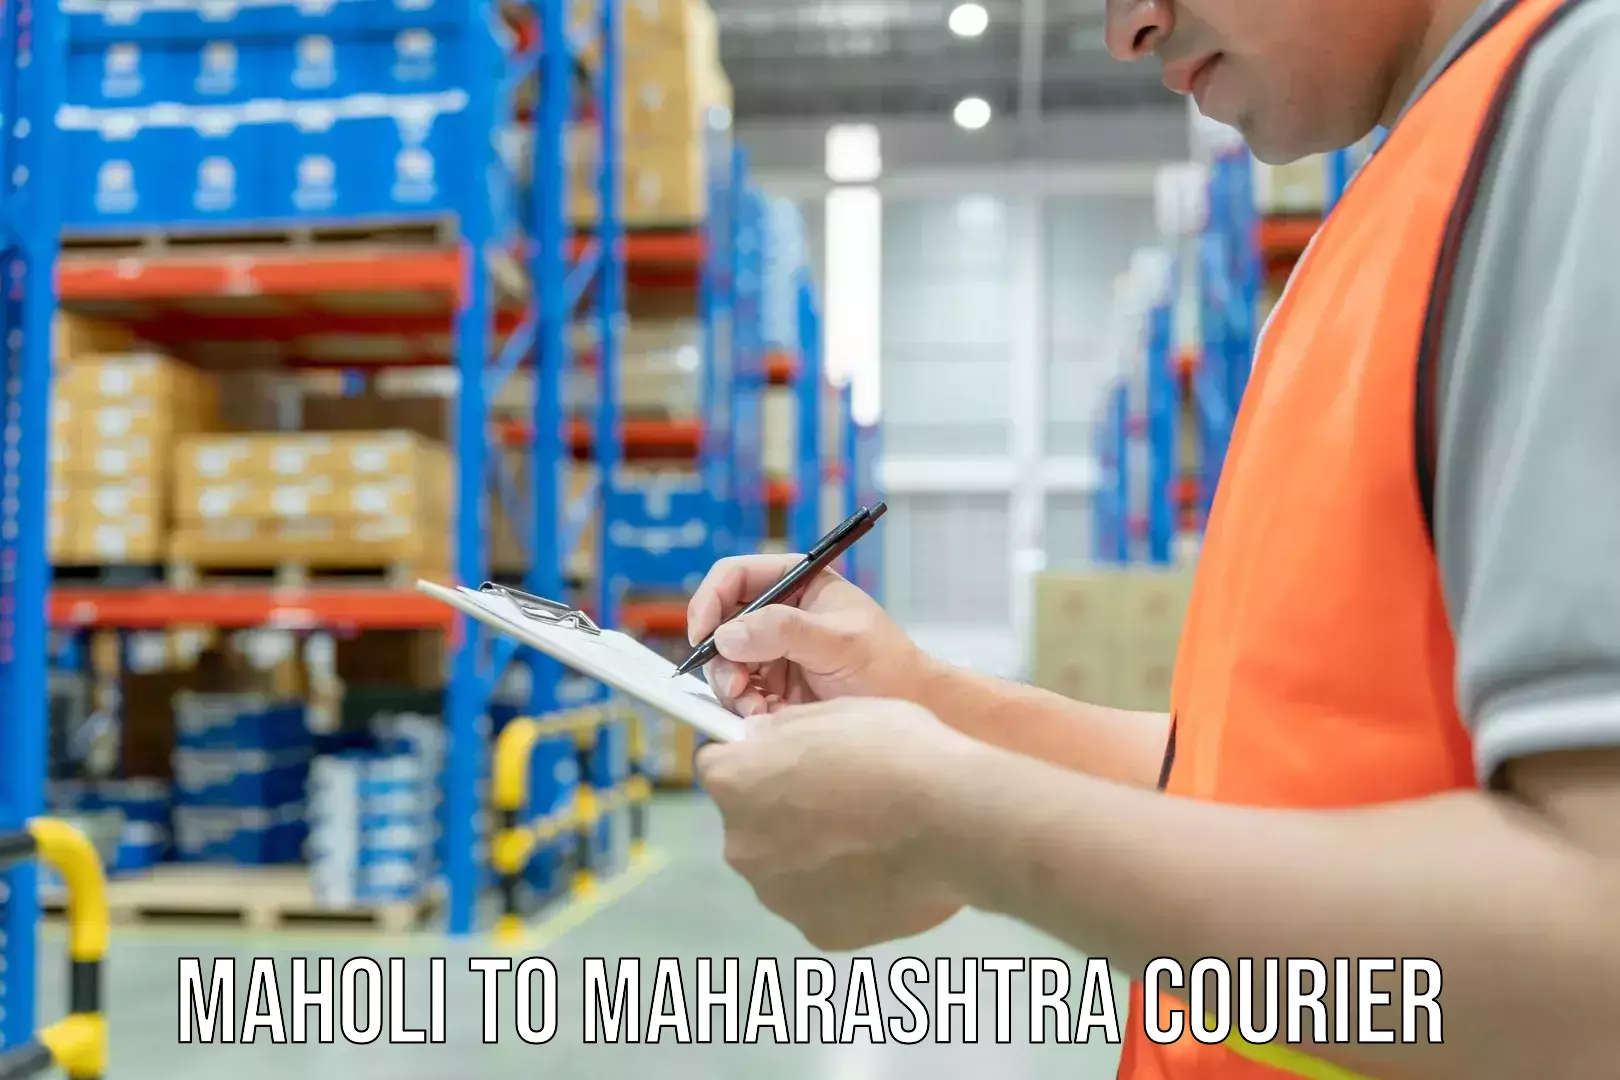 Furniture relocation experts Maholi to Maharashtra